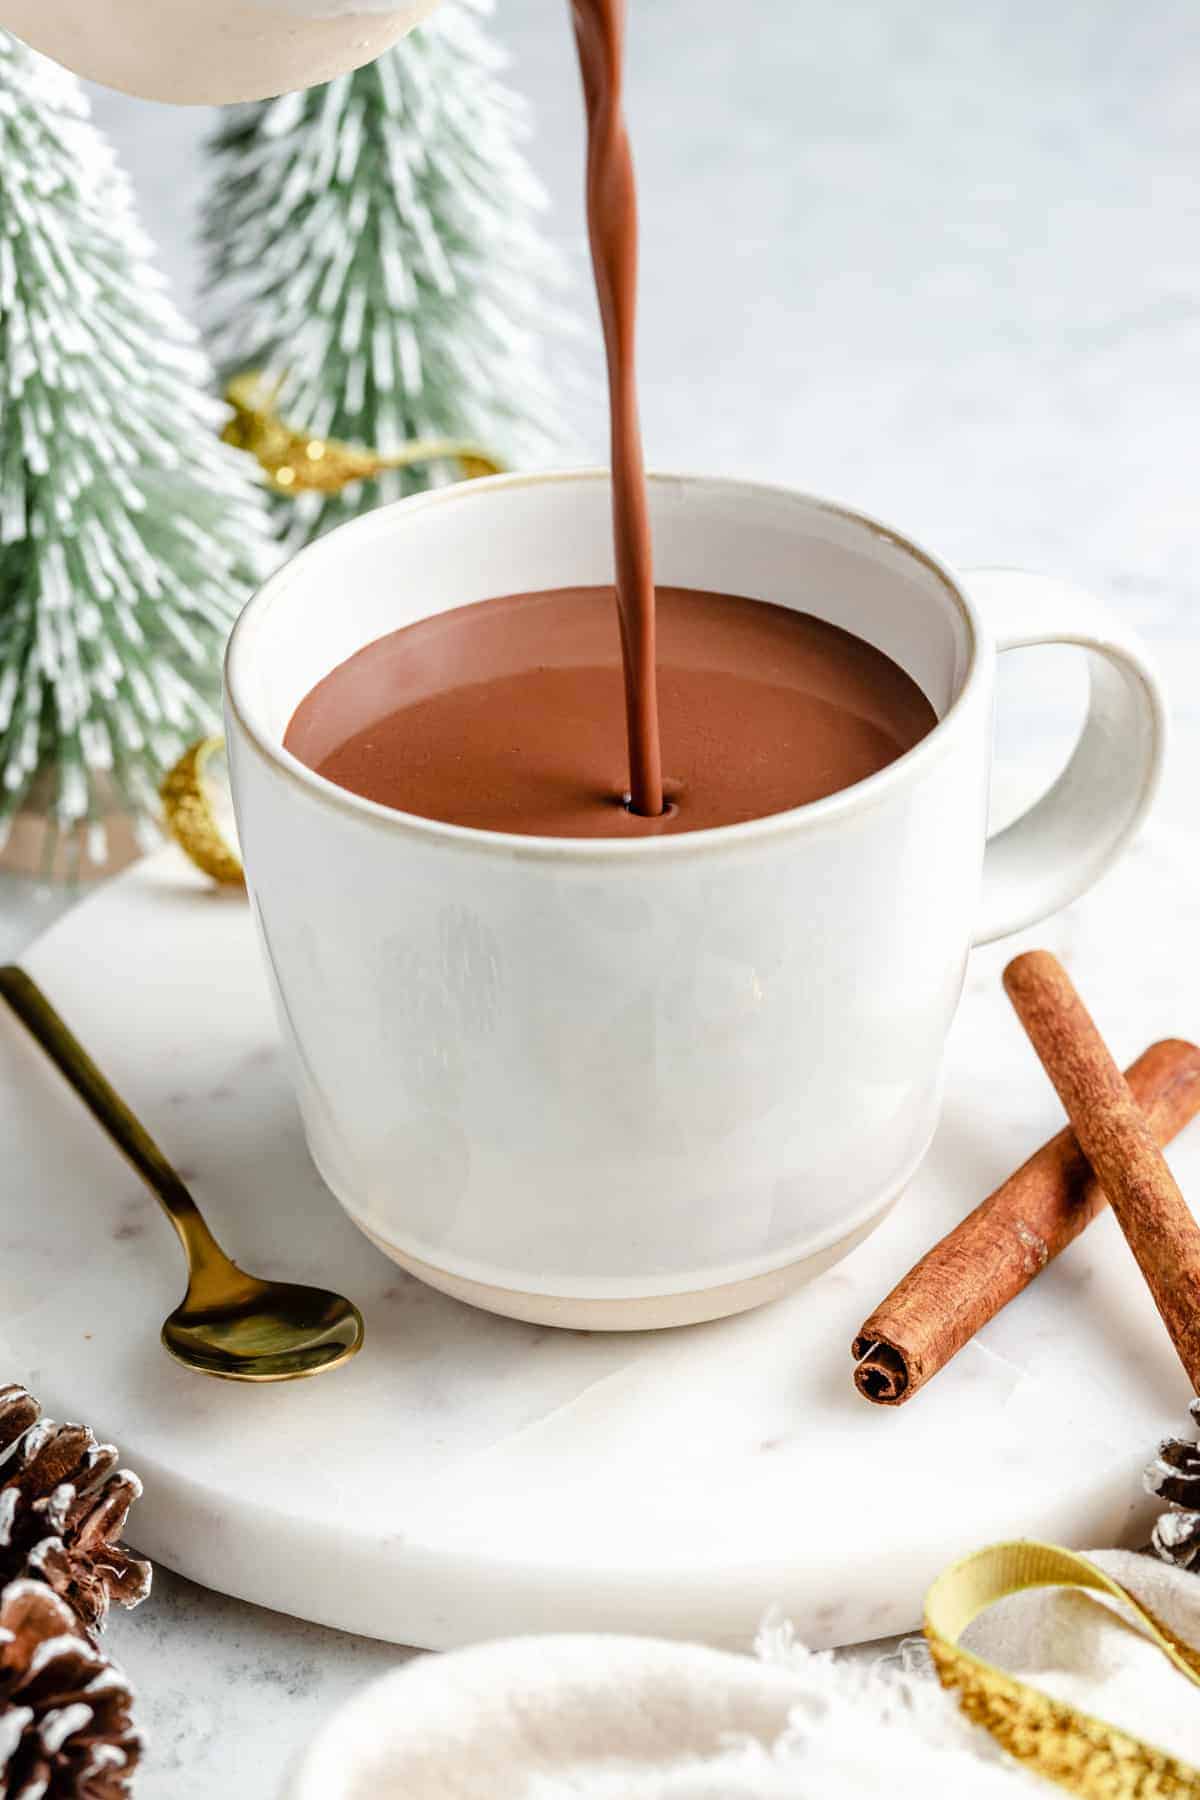 Pouring hot chocolate into mug